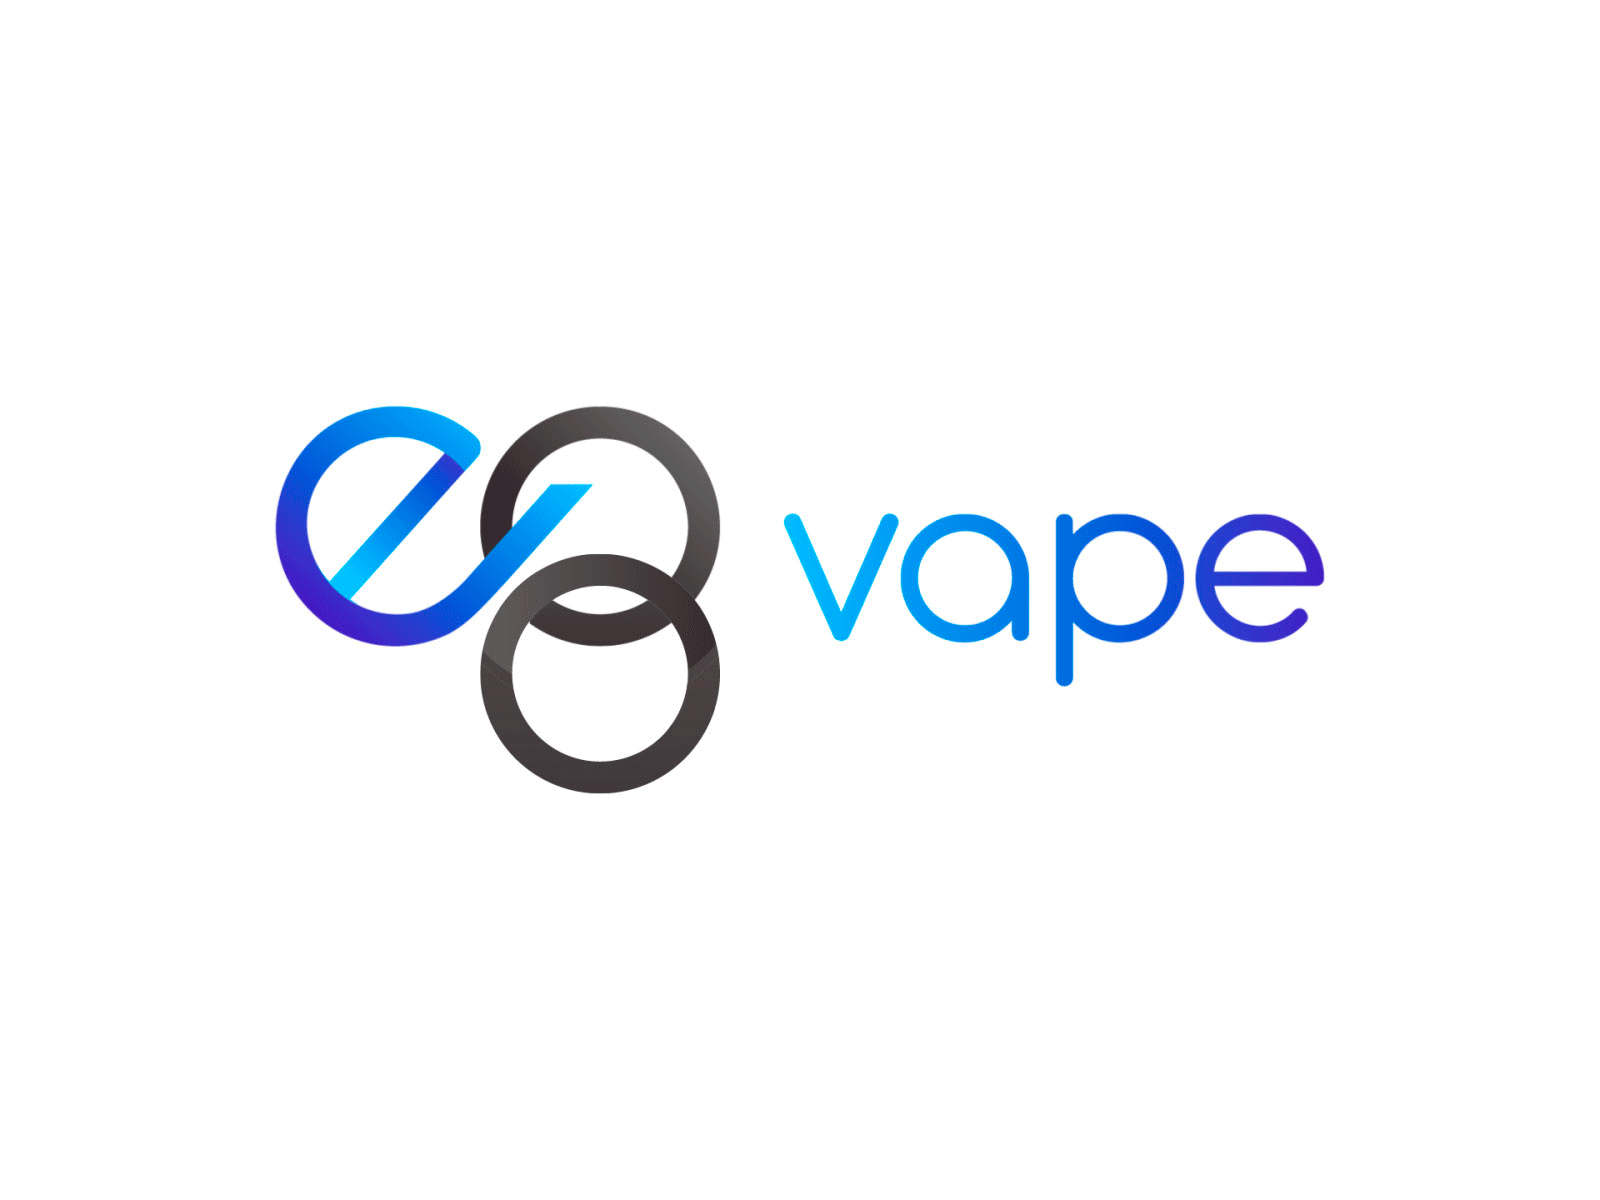 e8 vape -Logo Animation